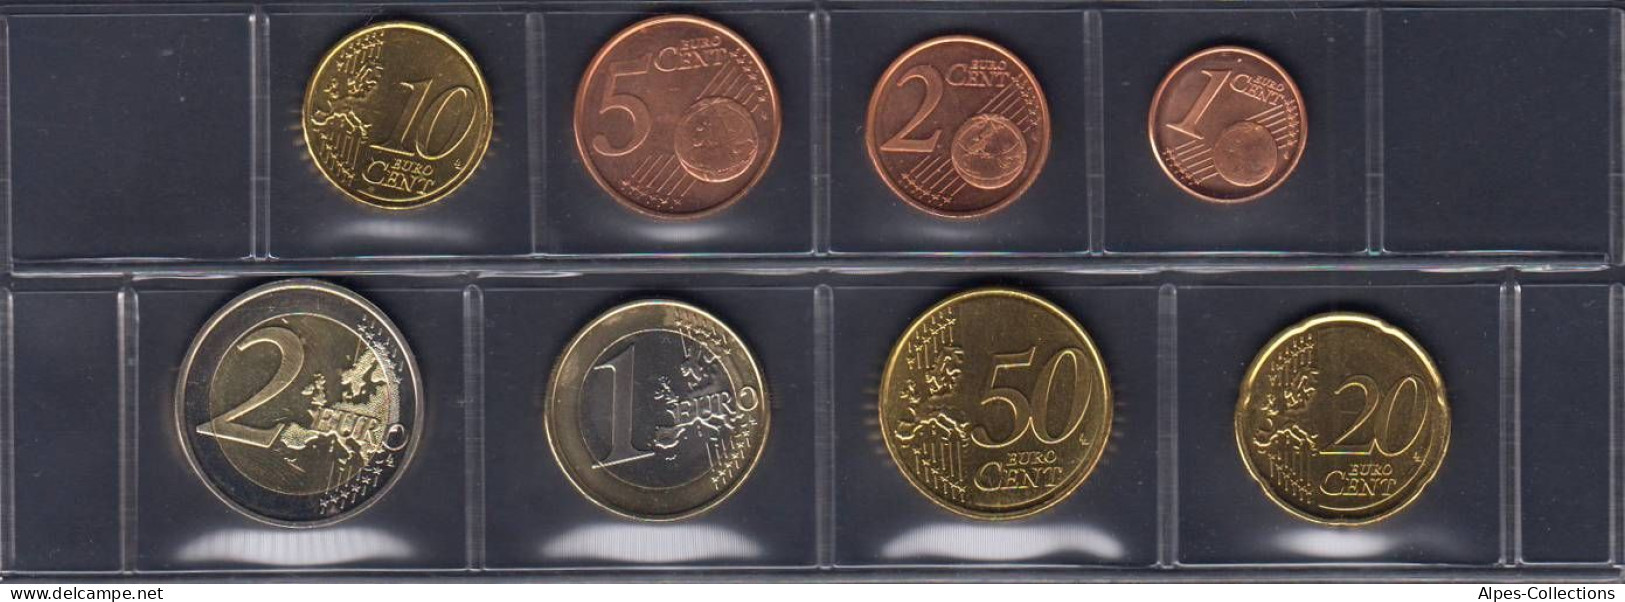 FIX2009.3 - SERIE FINLANDE - 2009 - 1 Cent à 2 Euros - Finlande